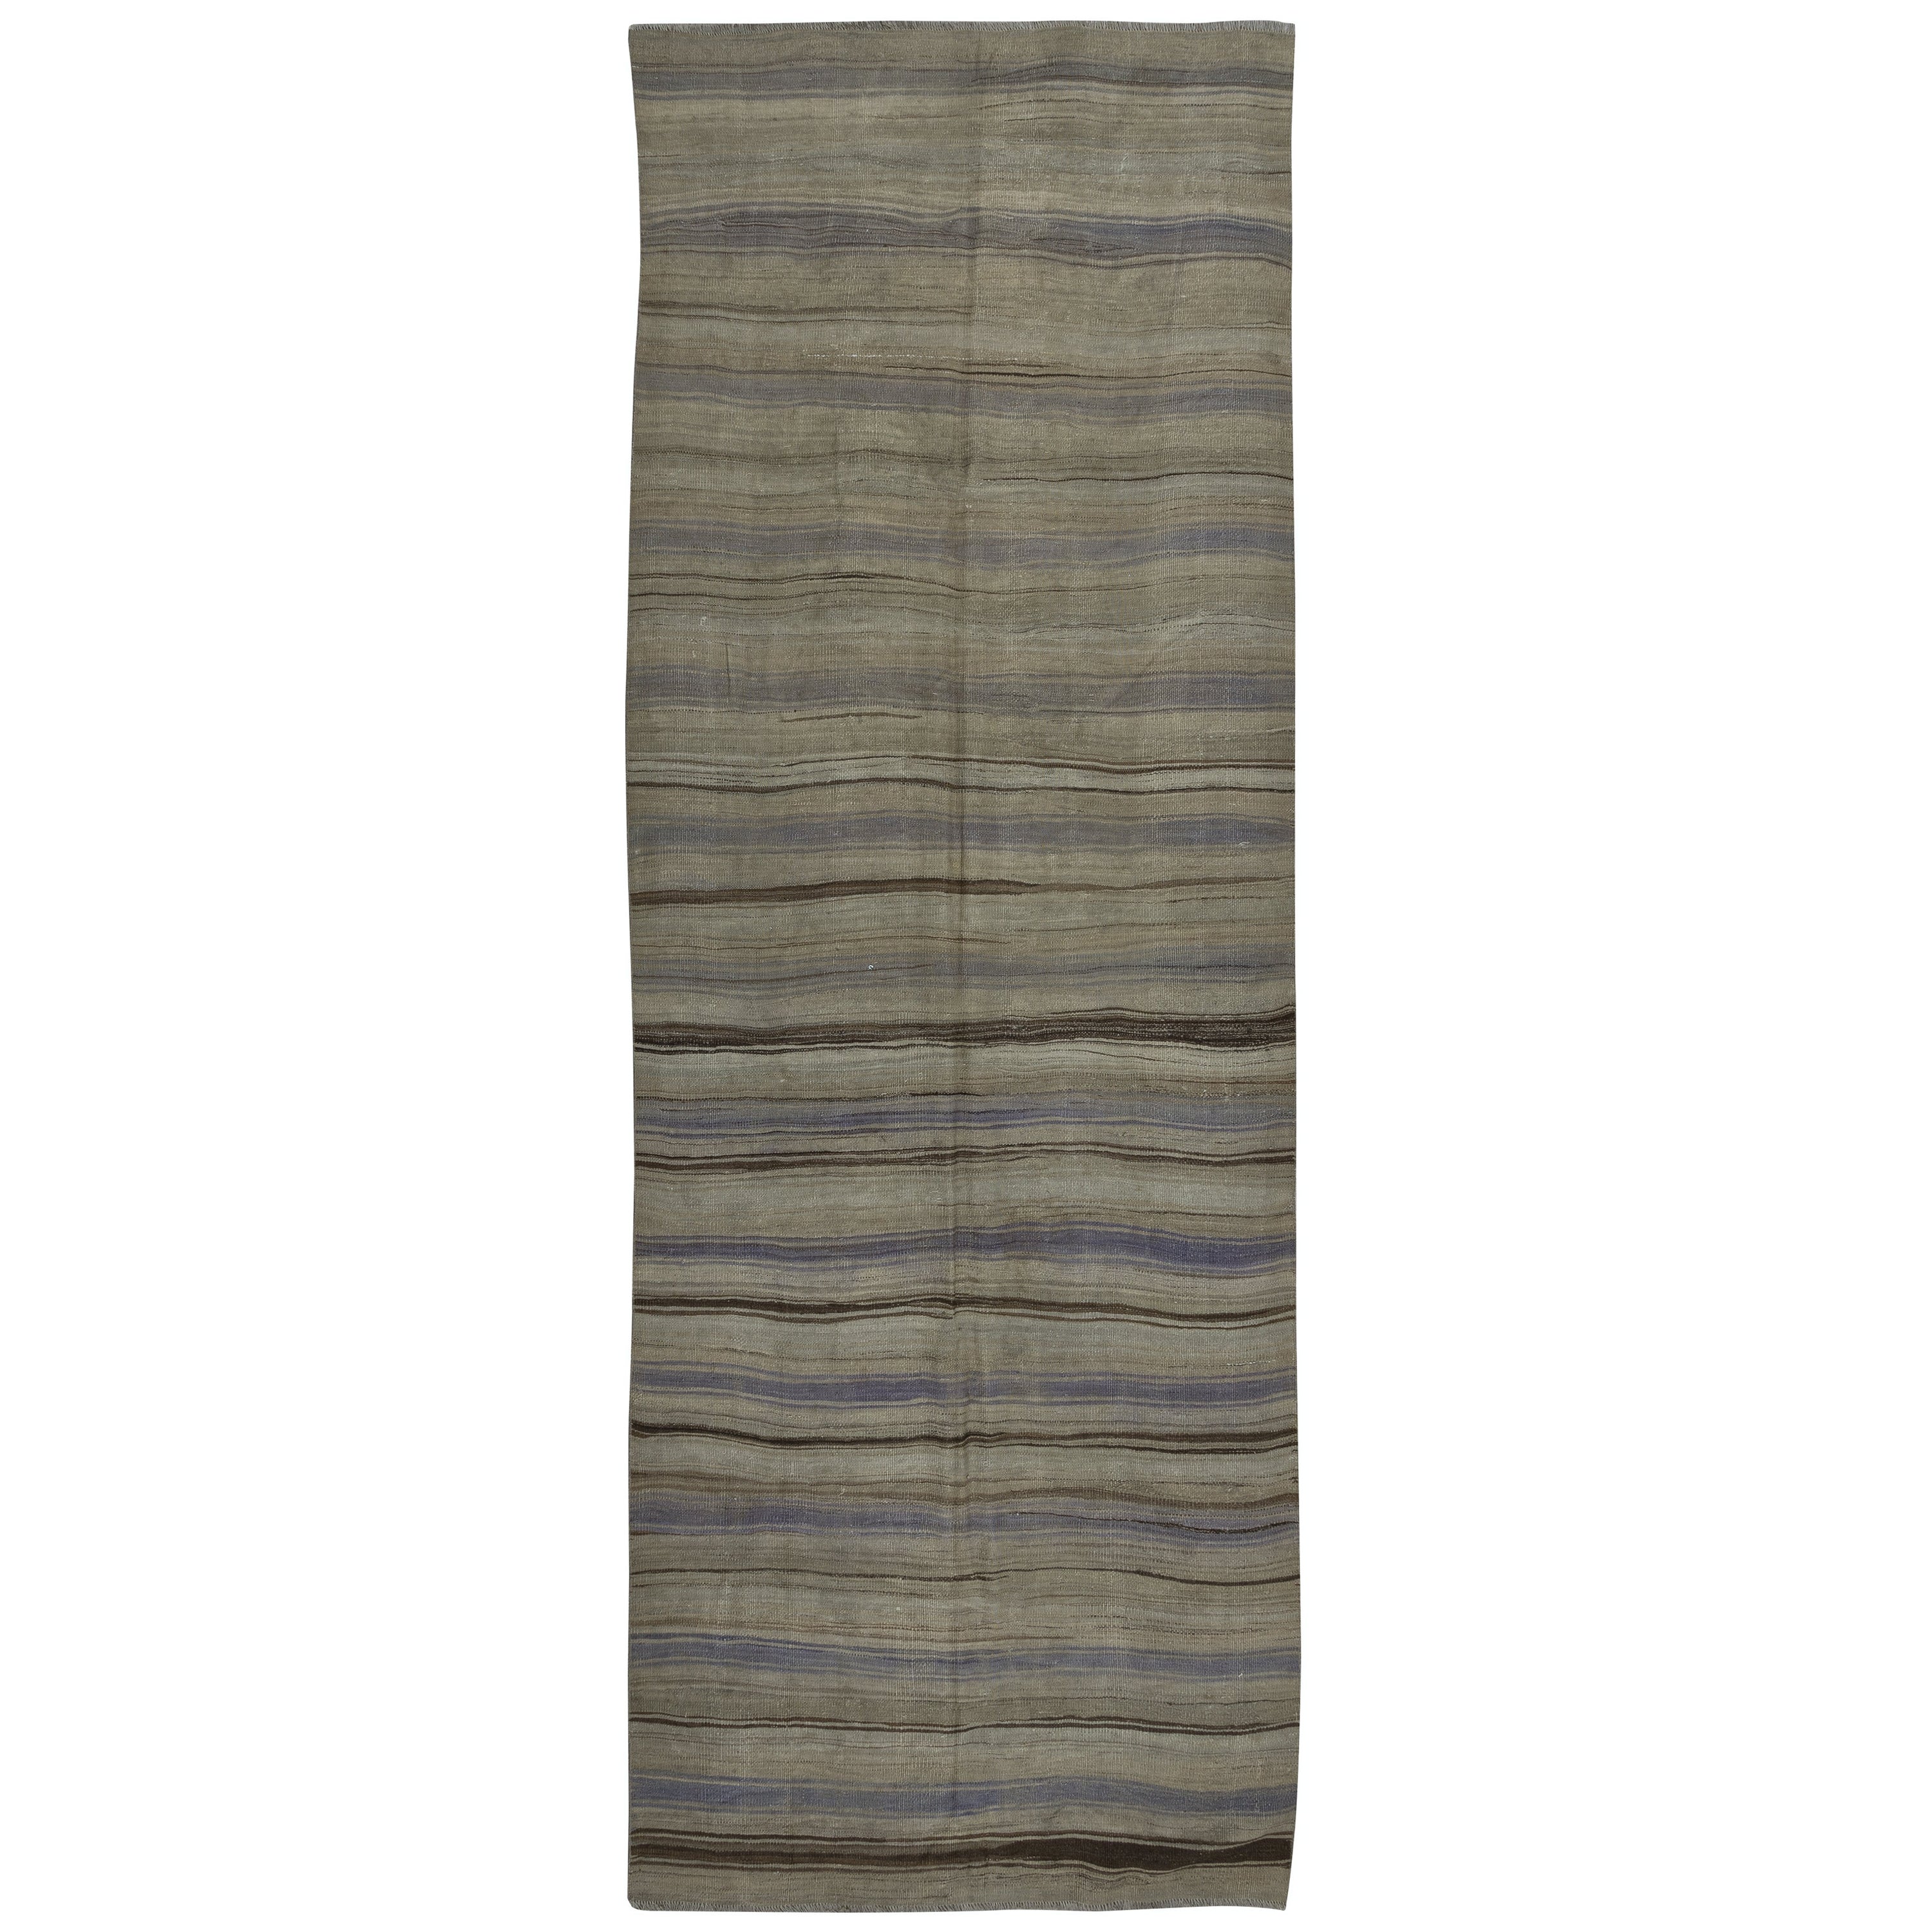 4.4x12.2 Ft Flat-Weave Turkish Runner Kilim, Vintage Striped Wool Corridor Rug For Sale